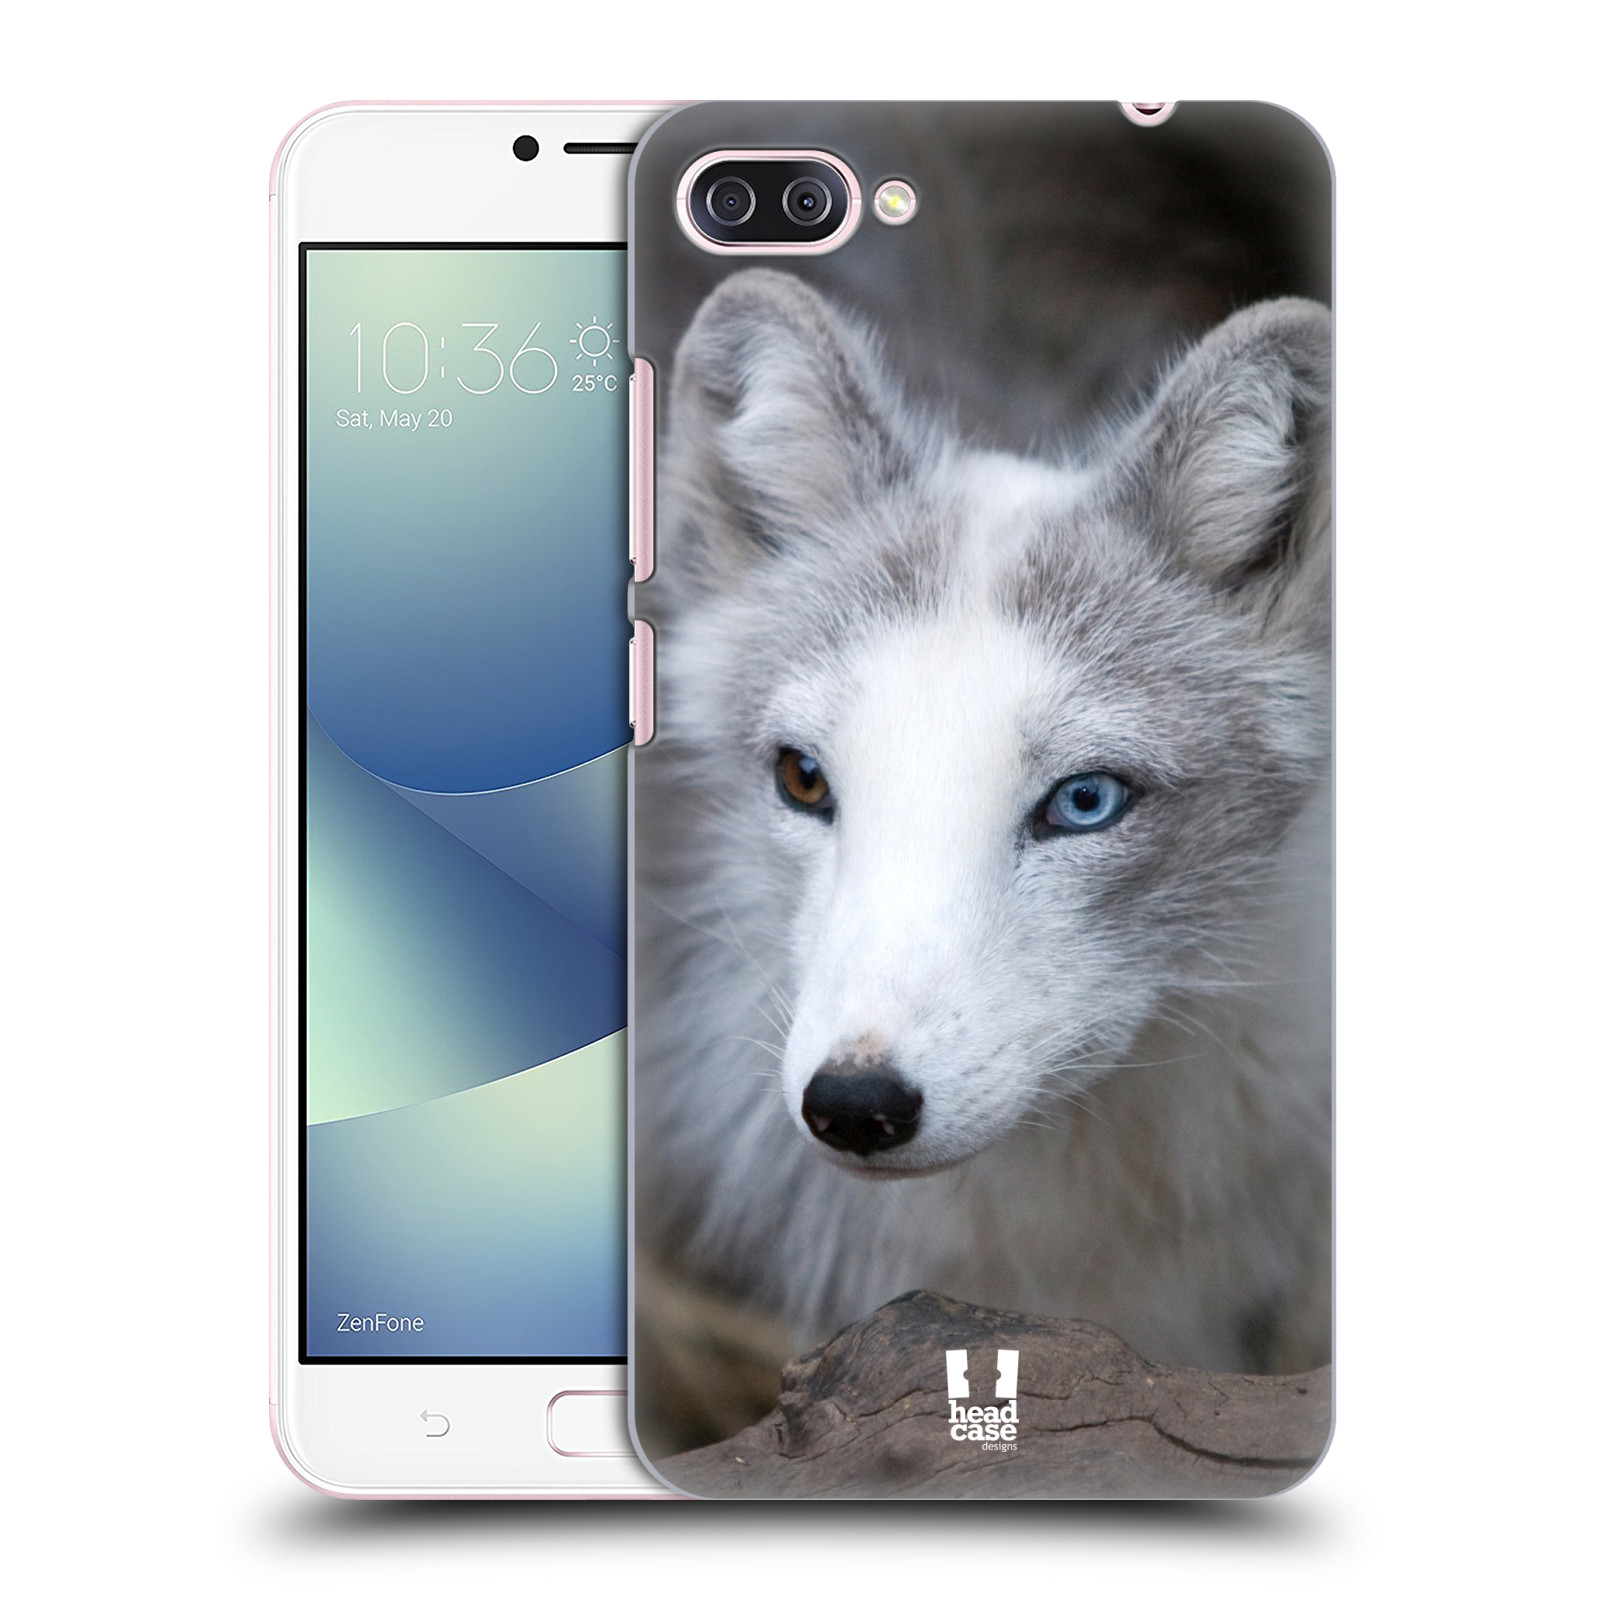 HEAD CASE plastový obal na mobil Asus Zenfone 4 MAX ZC554KL vzor slavná zvířata foto  Liška polární